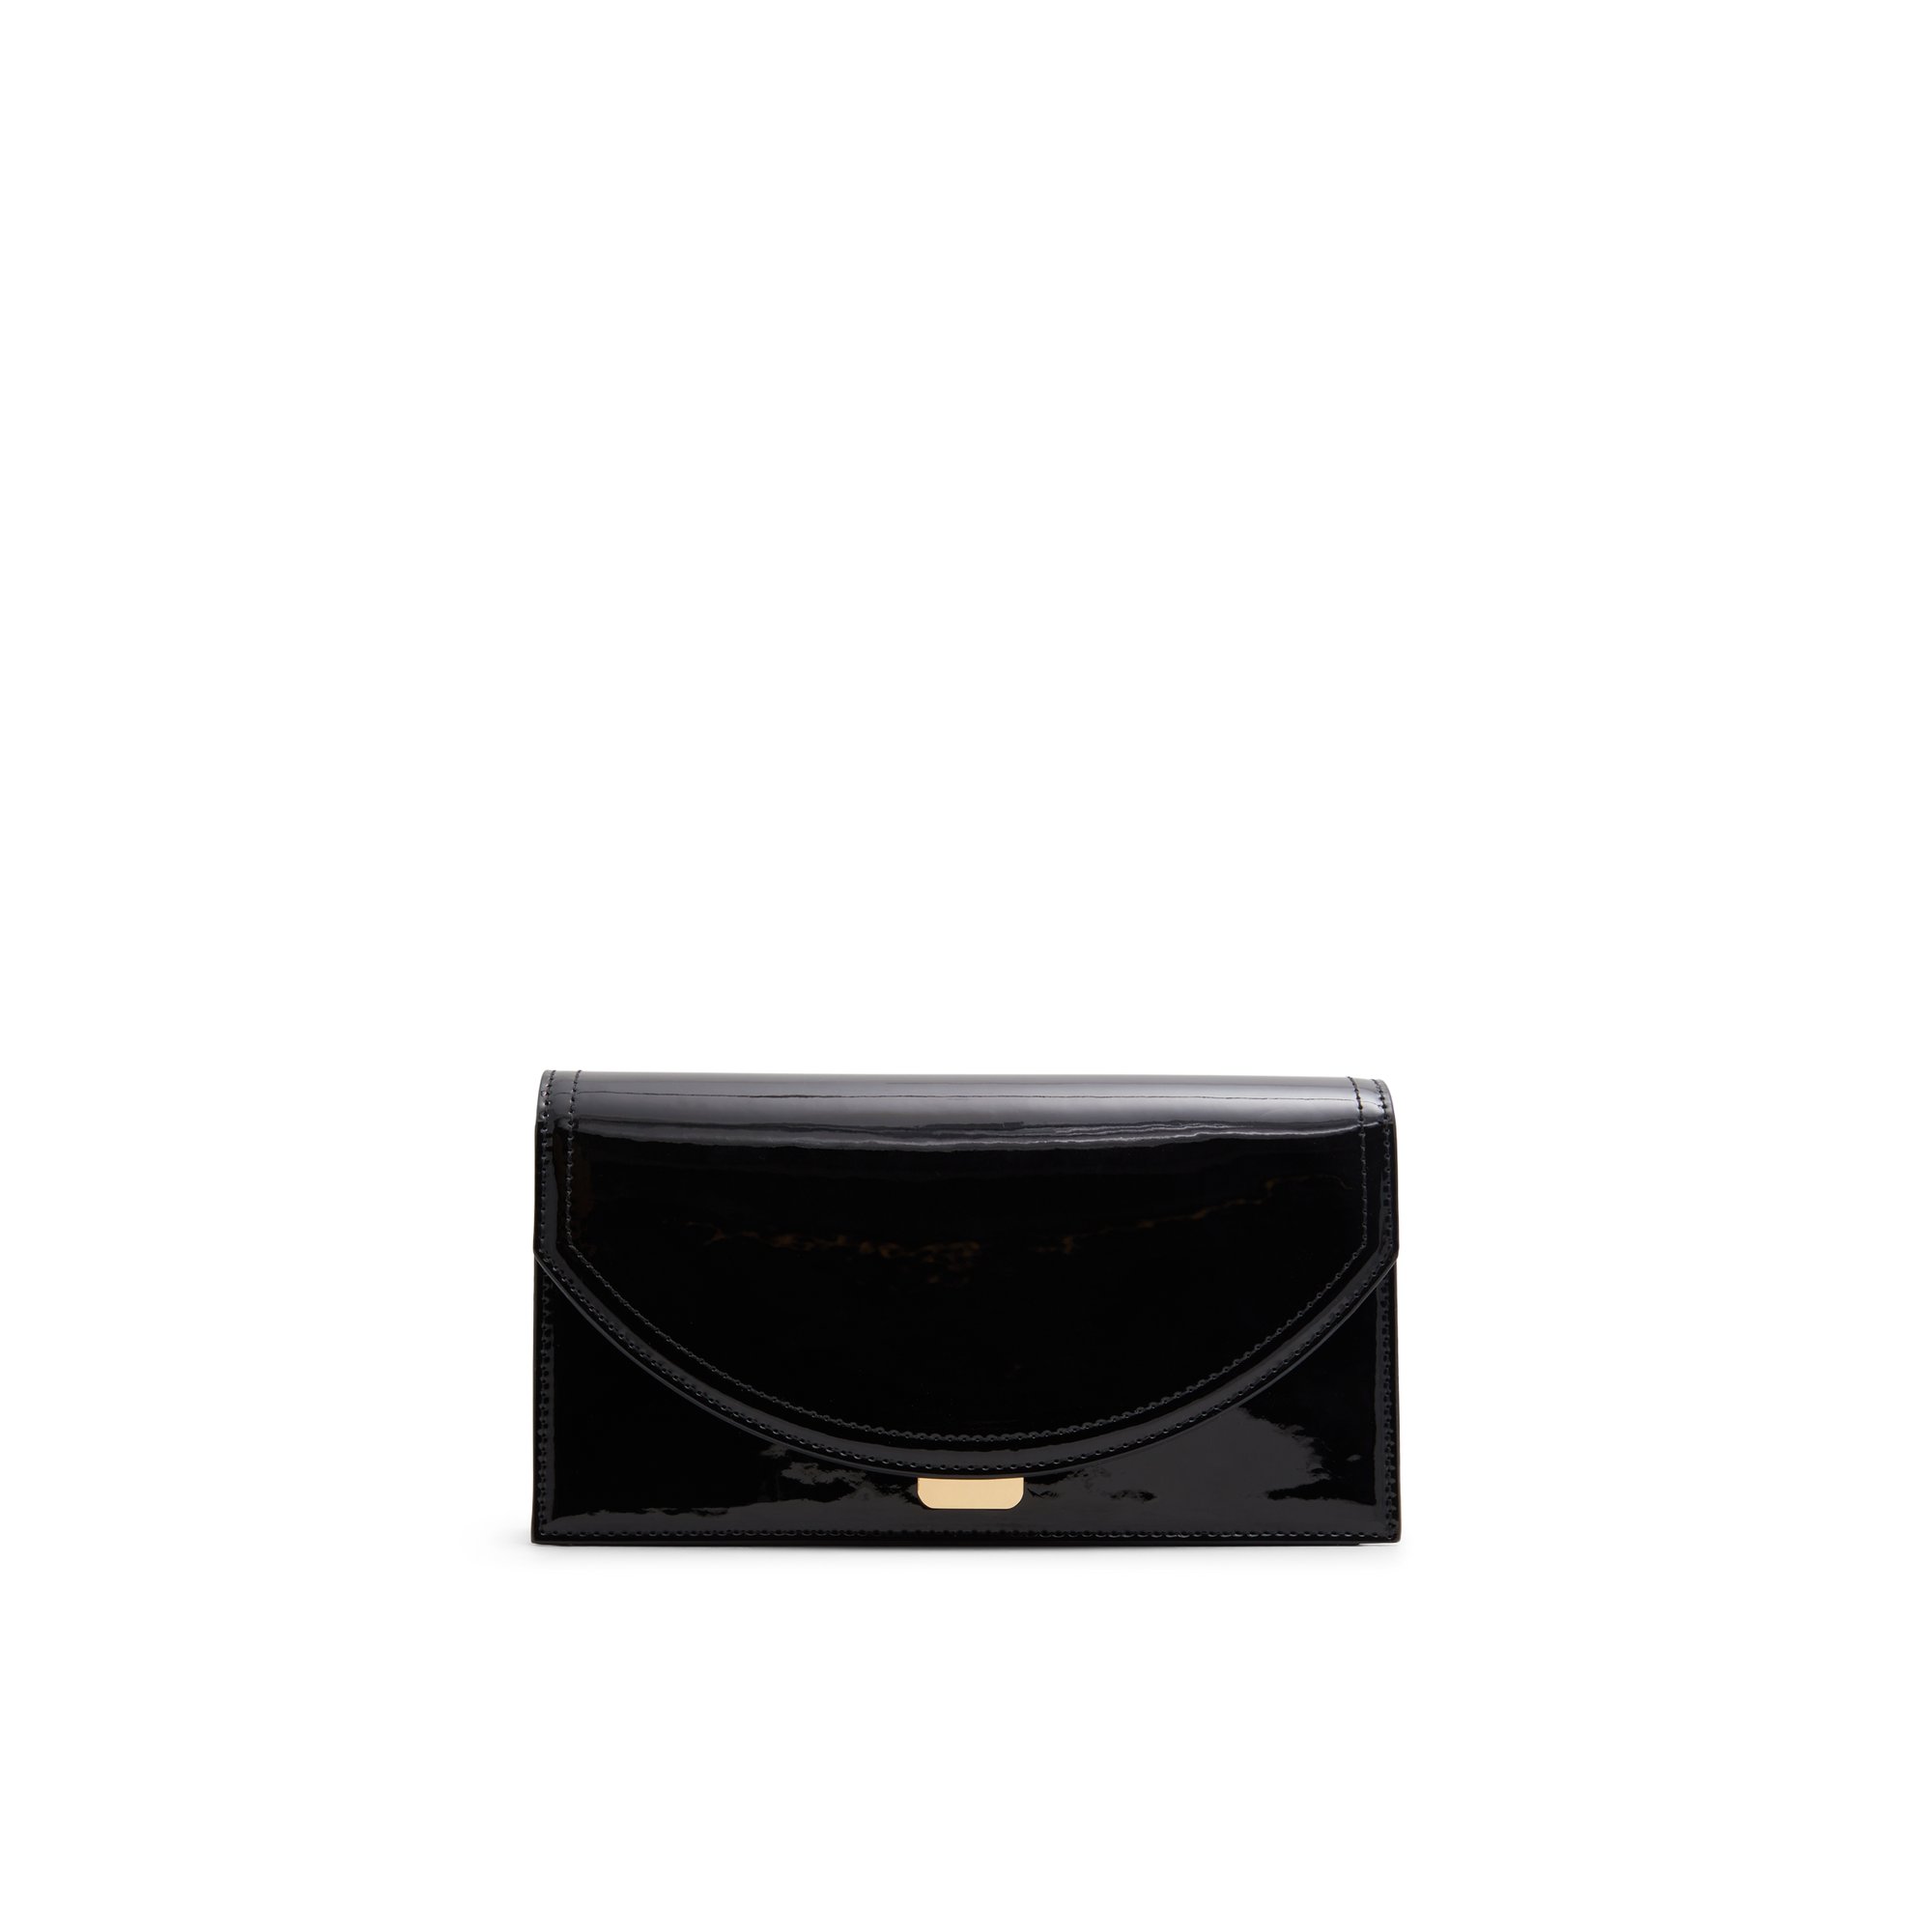 ALDO Kalonnx - Women's Handbags Clutches & Evening Bags - Black